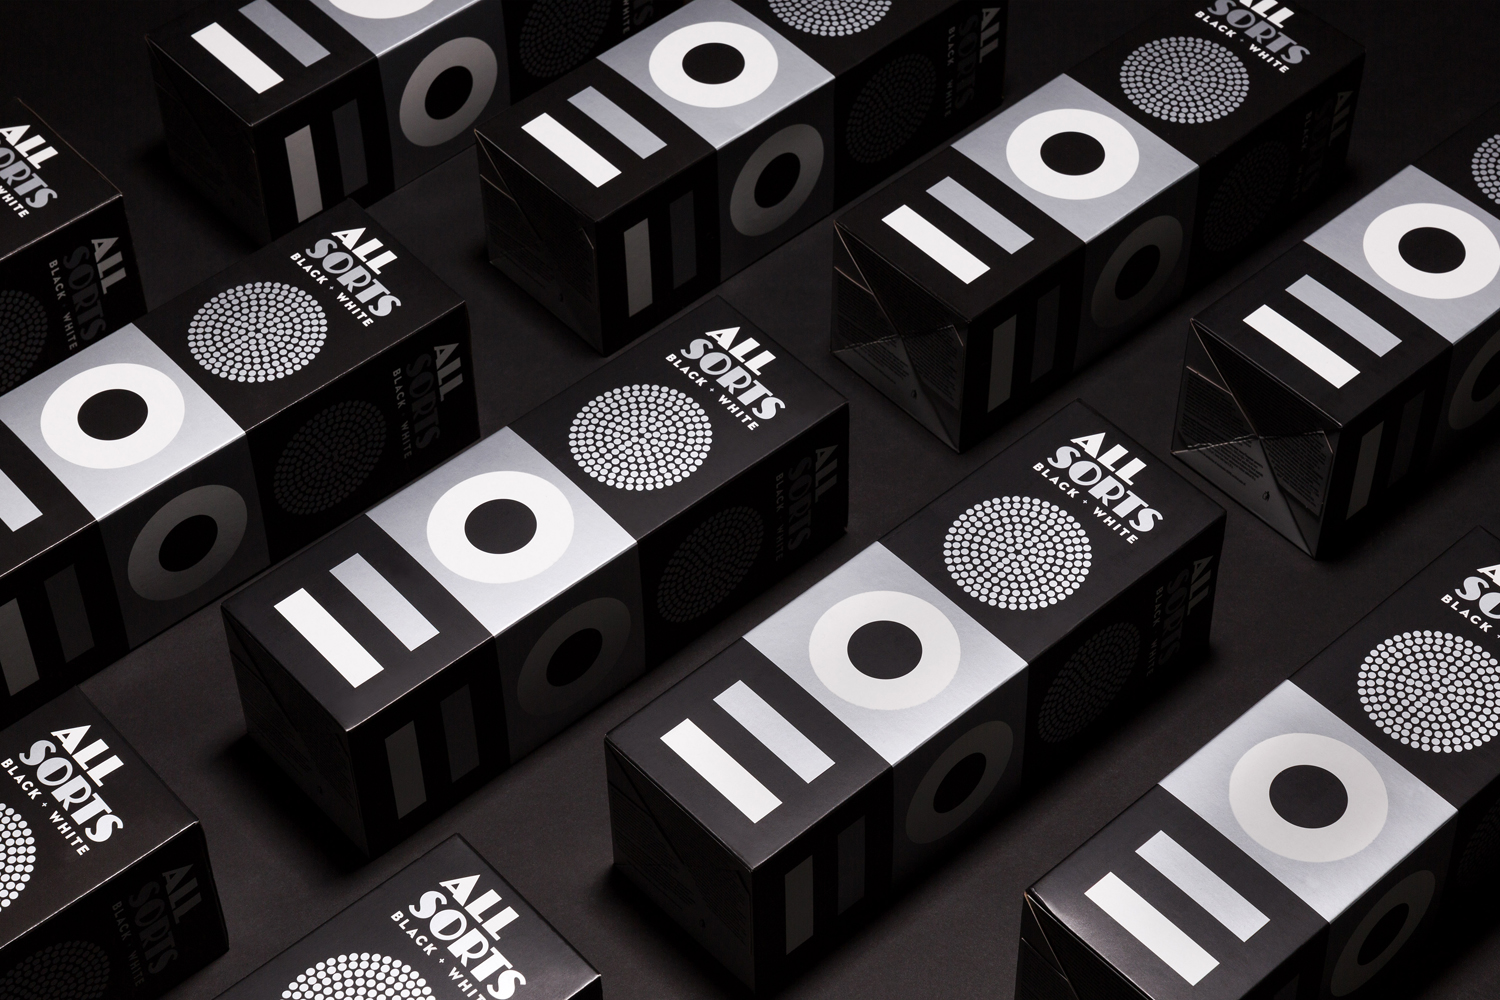 Black & White in Packaging – Allsorts Black & White Edition by Bond, Finland